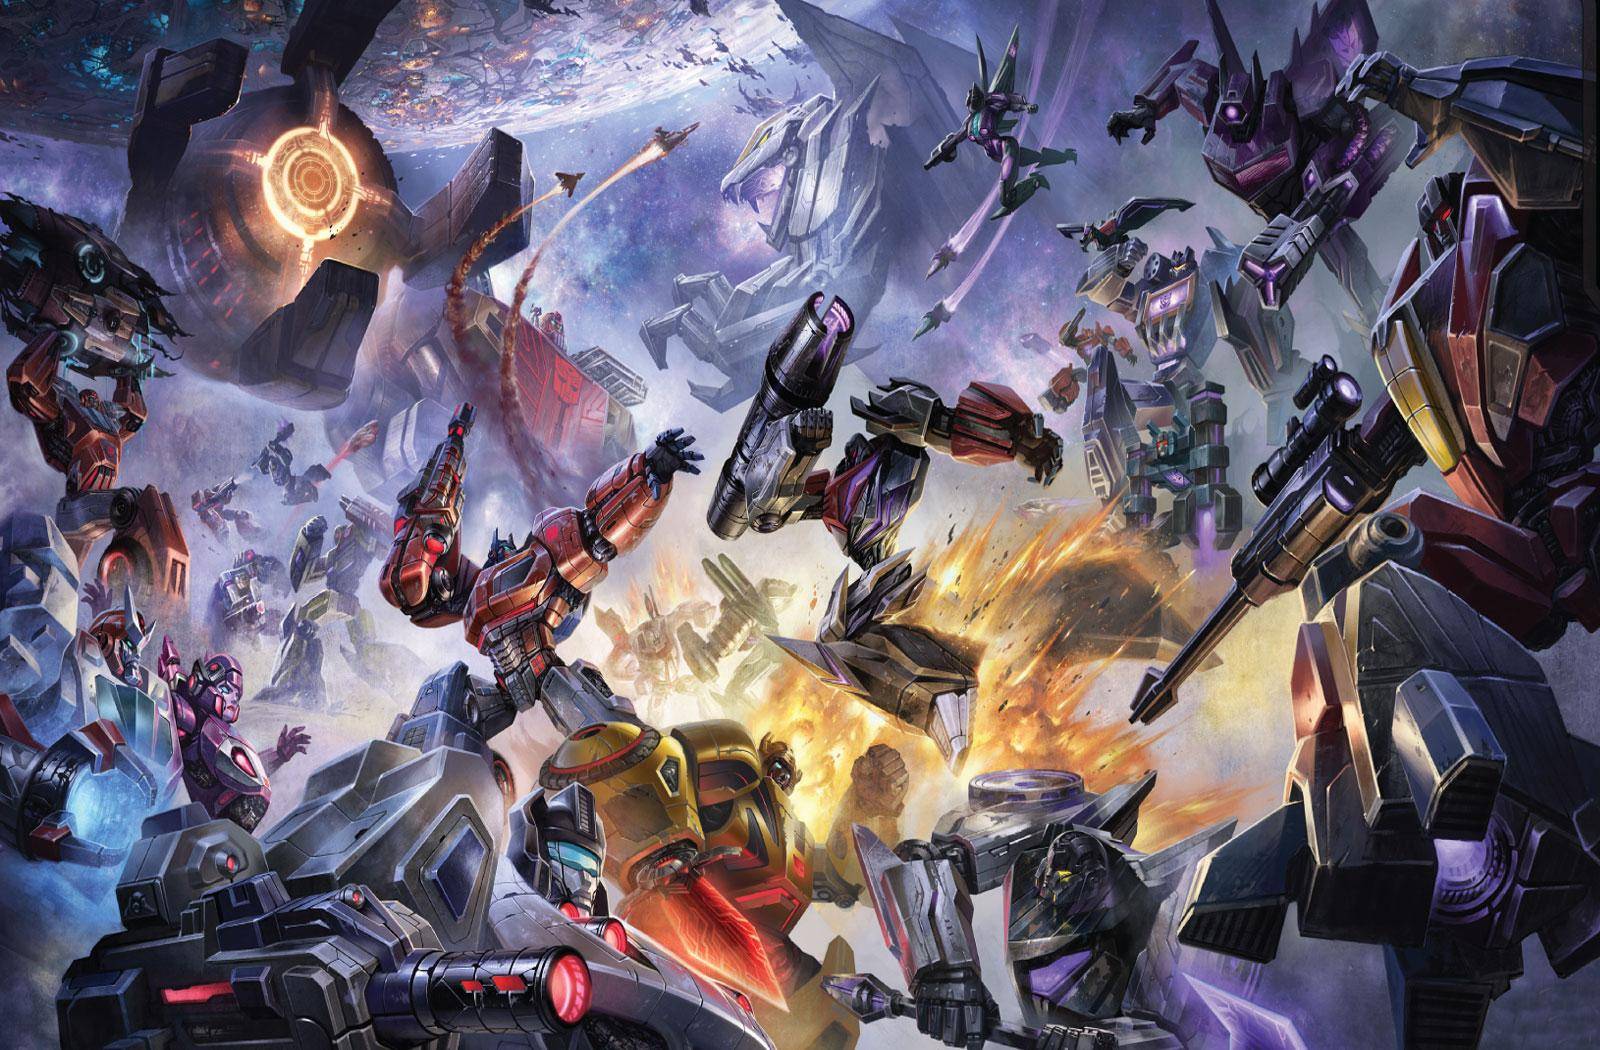 Transformers War Of Cybertron